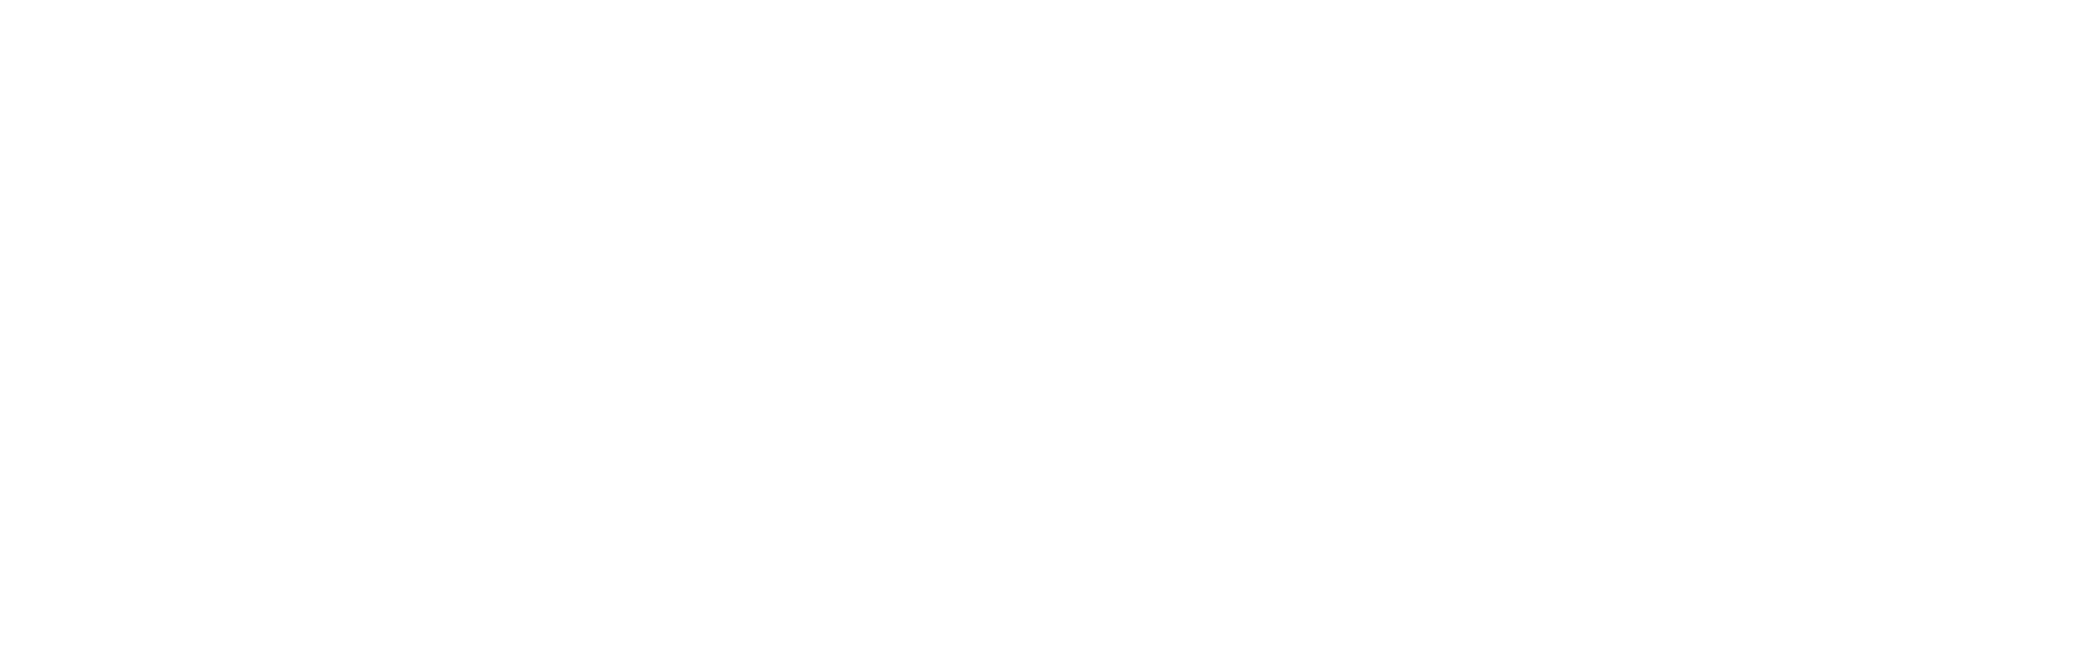 Safer Schools NI logo white